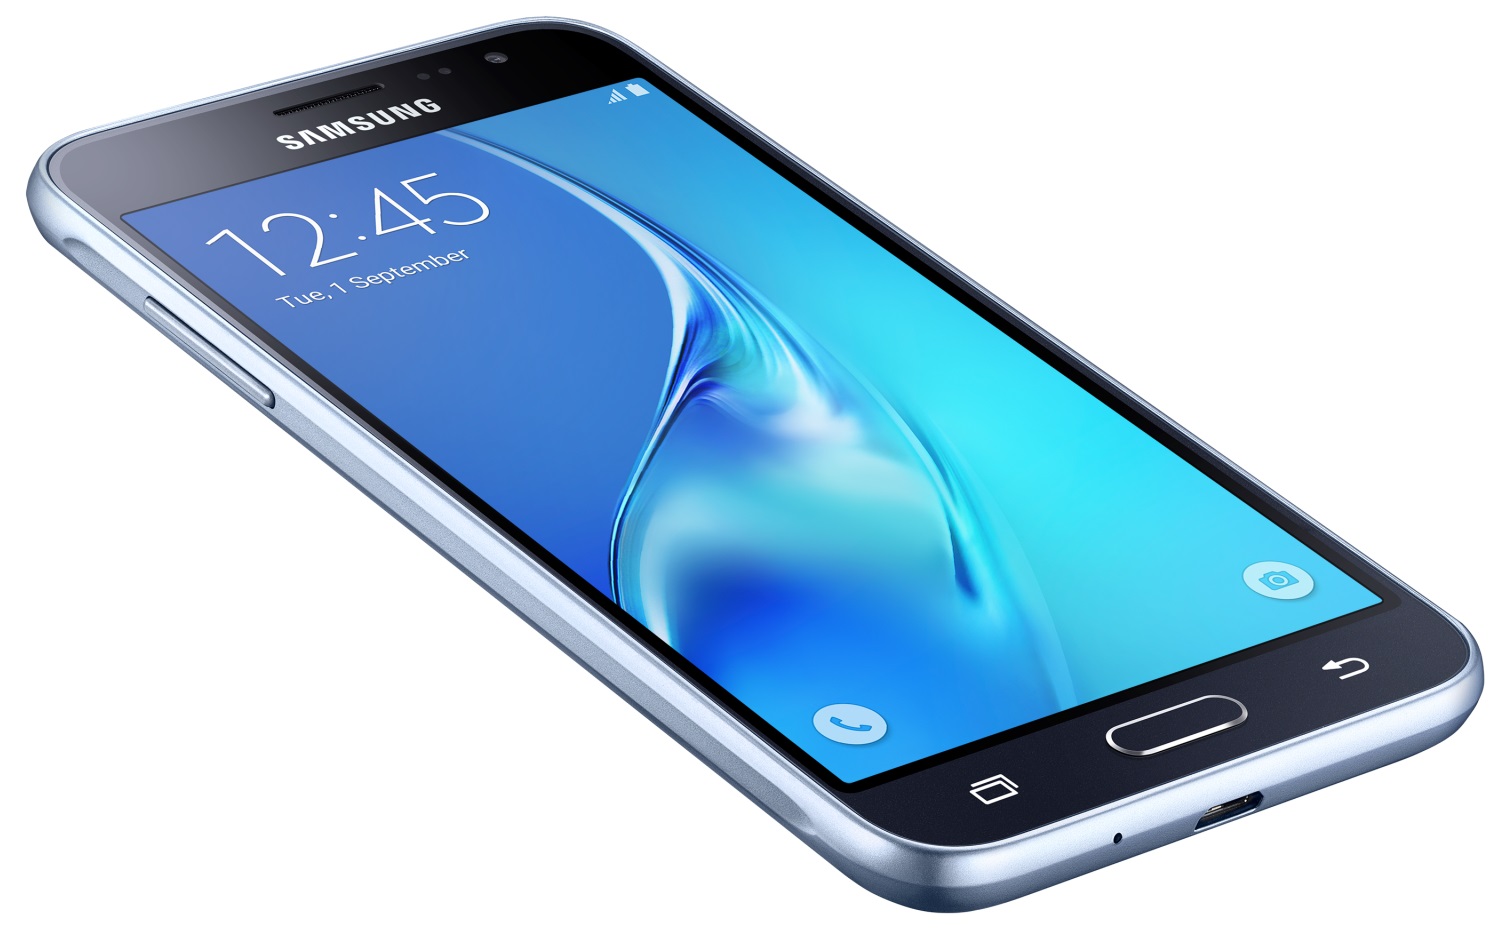 Купить самсунг телефон цены недорого. Samsung Galaxy j1 SM-j120f. Samsung Galaxy j1 2016. Samsung Galaxy j3 2016 j320f. Samsung Galaxy j1 2016 SM-j120f.